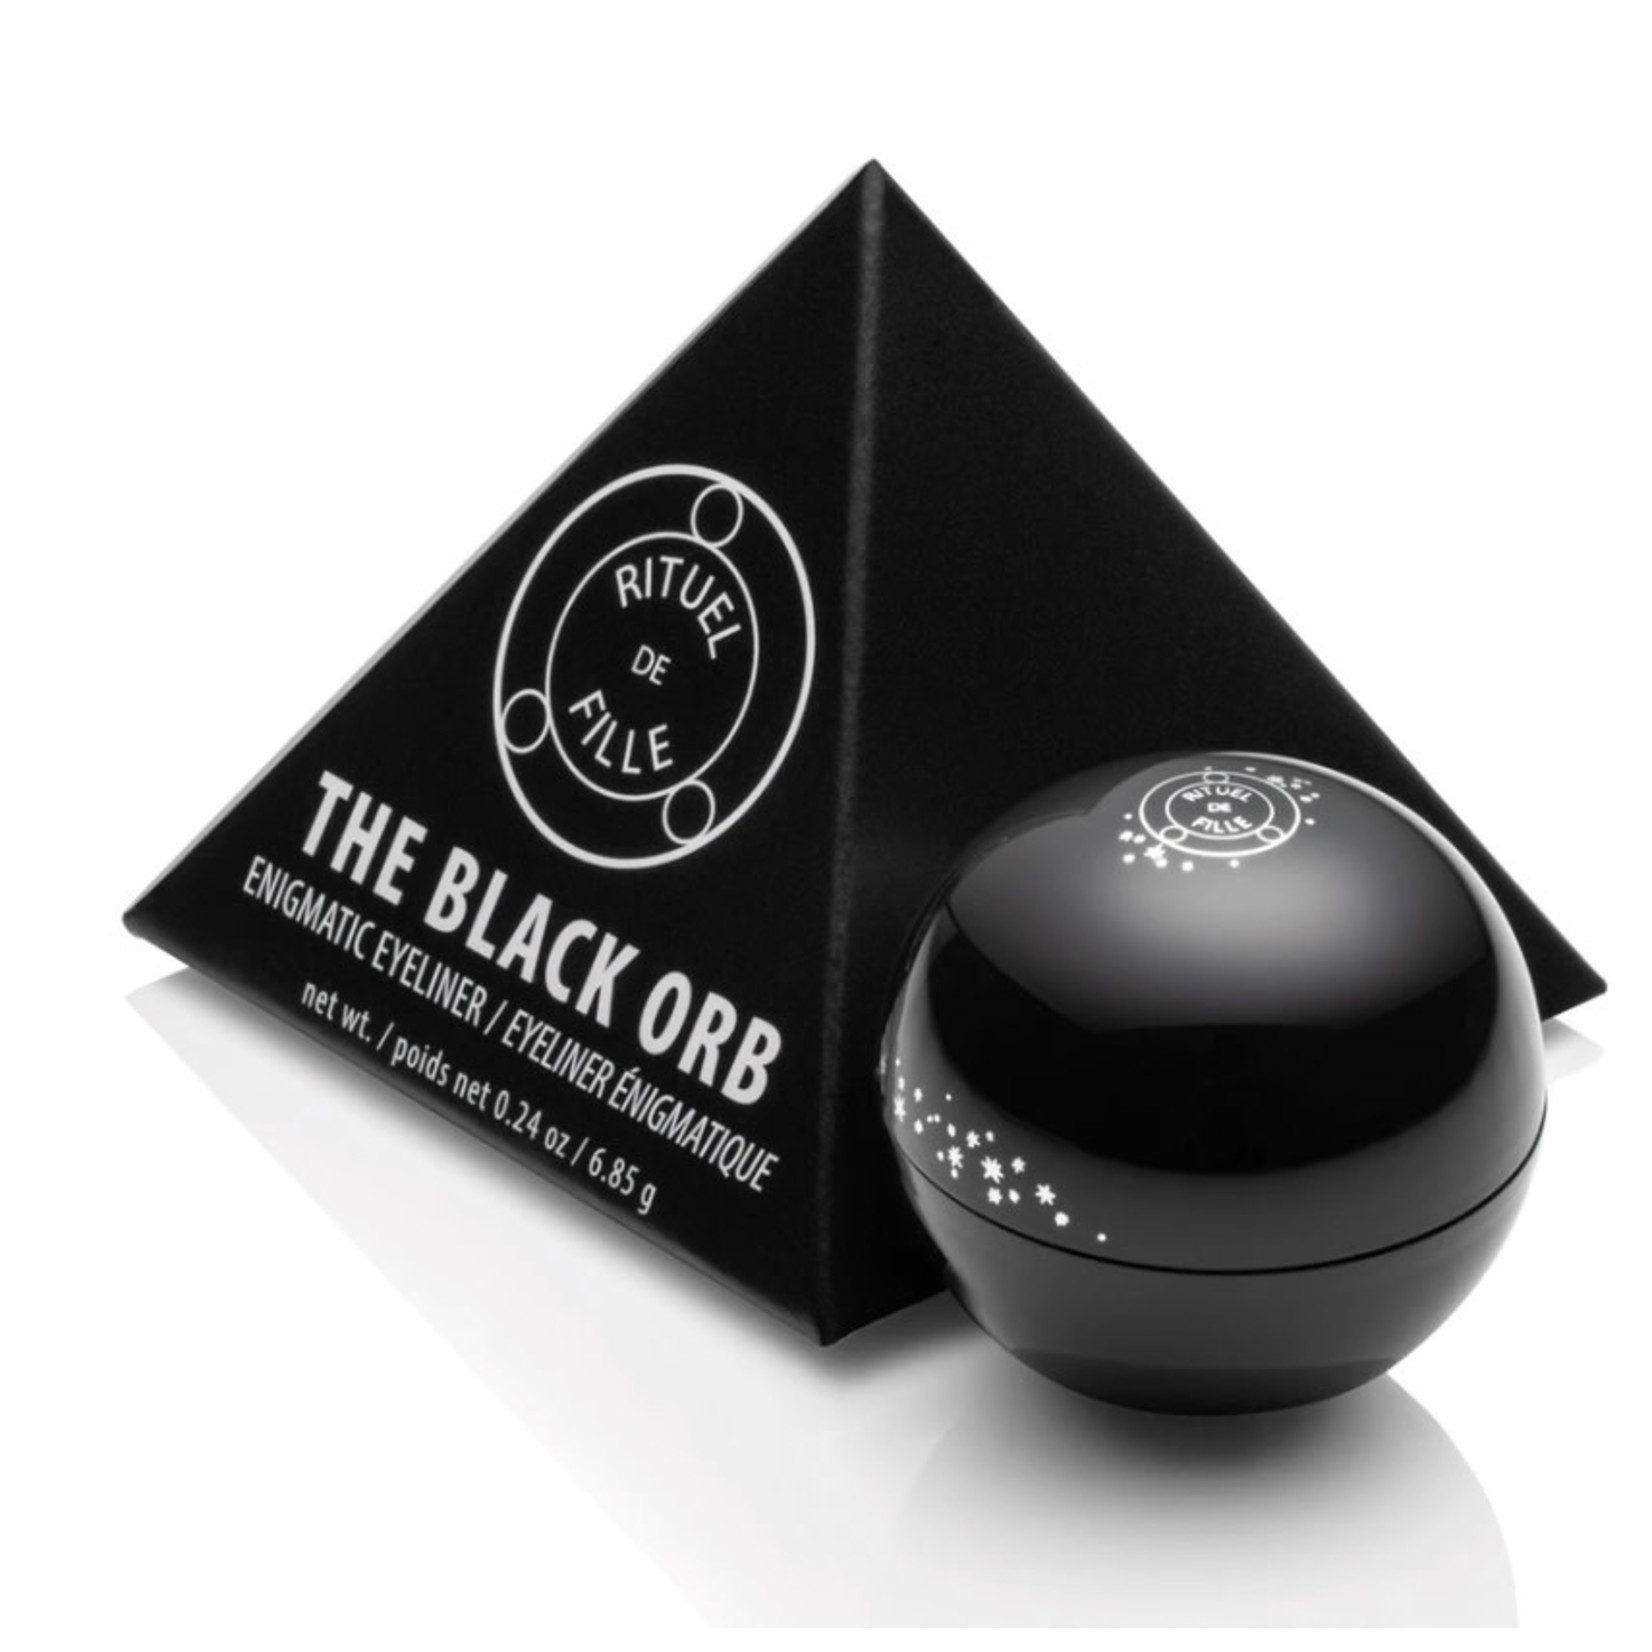 The Black Orb Enigmatic Kohl Eyeliner